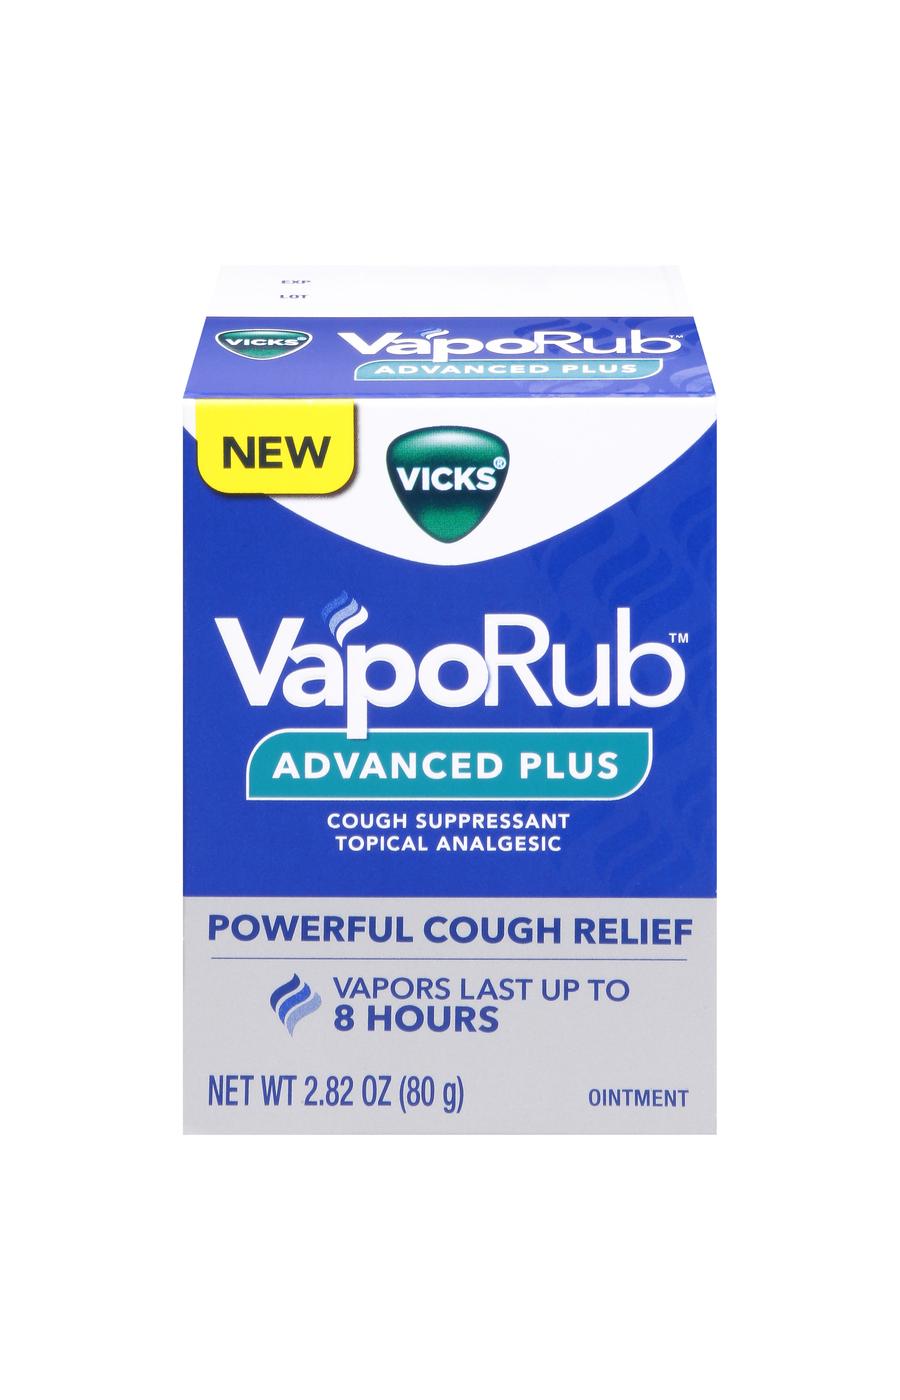 Vicks VapoRub Advanced Plus Cough Suppressant; image 1 of 2